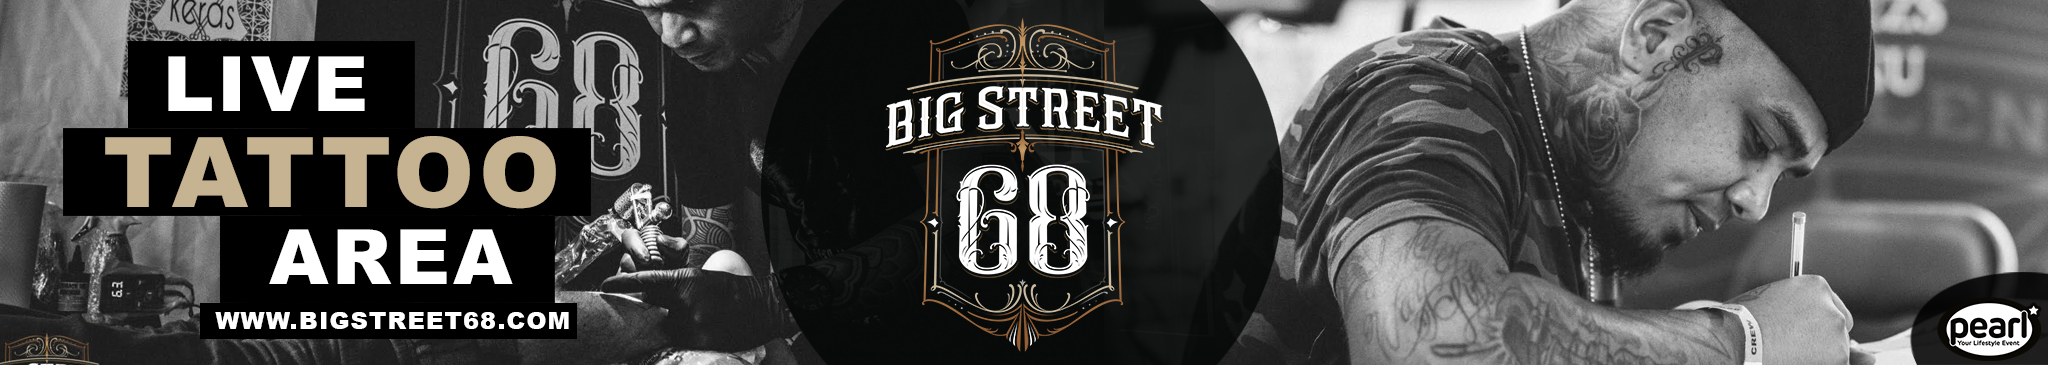 bigstreet68-bannerV1-pearl